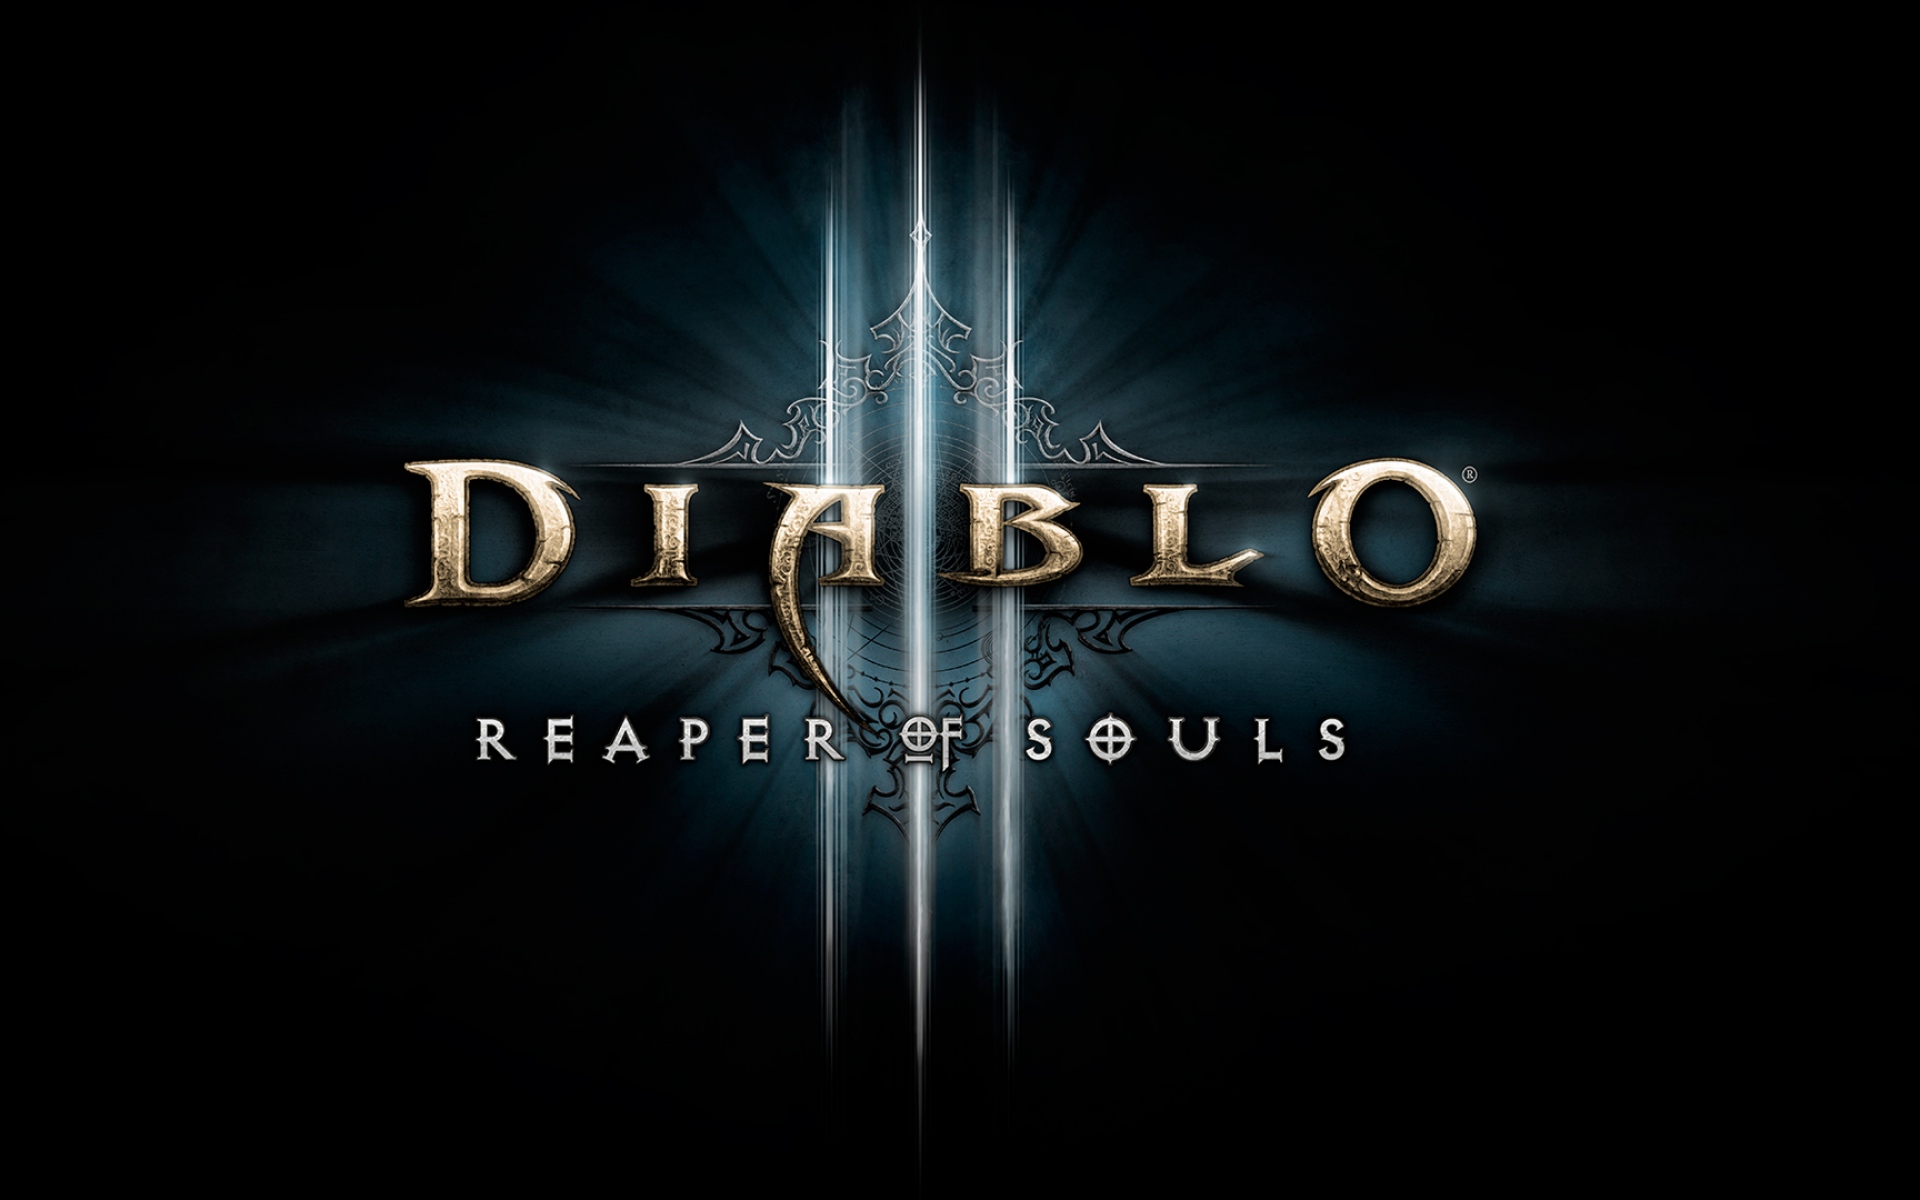 Картинки Диабло III жнеца душ, Diablo III, Blizzard Entertainment, 2014 фото и обои на рабочий стол